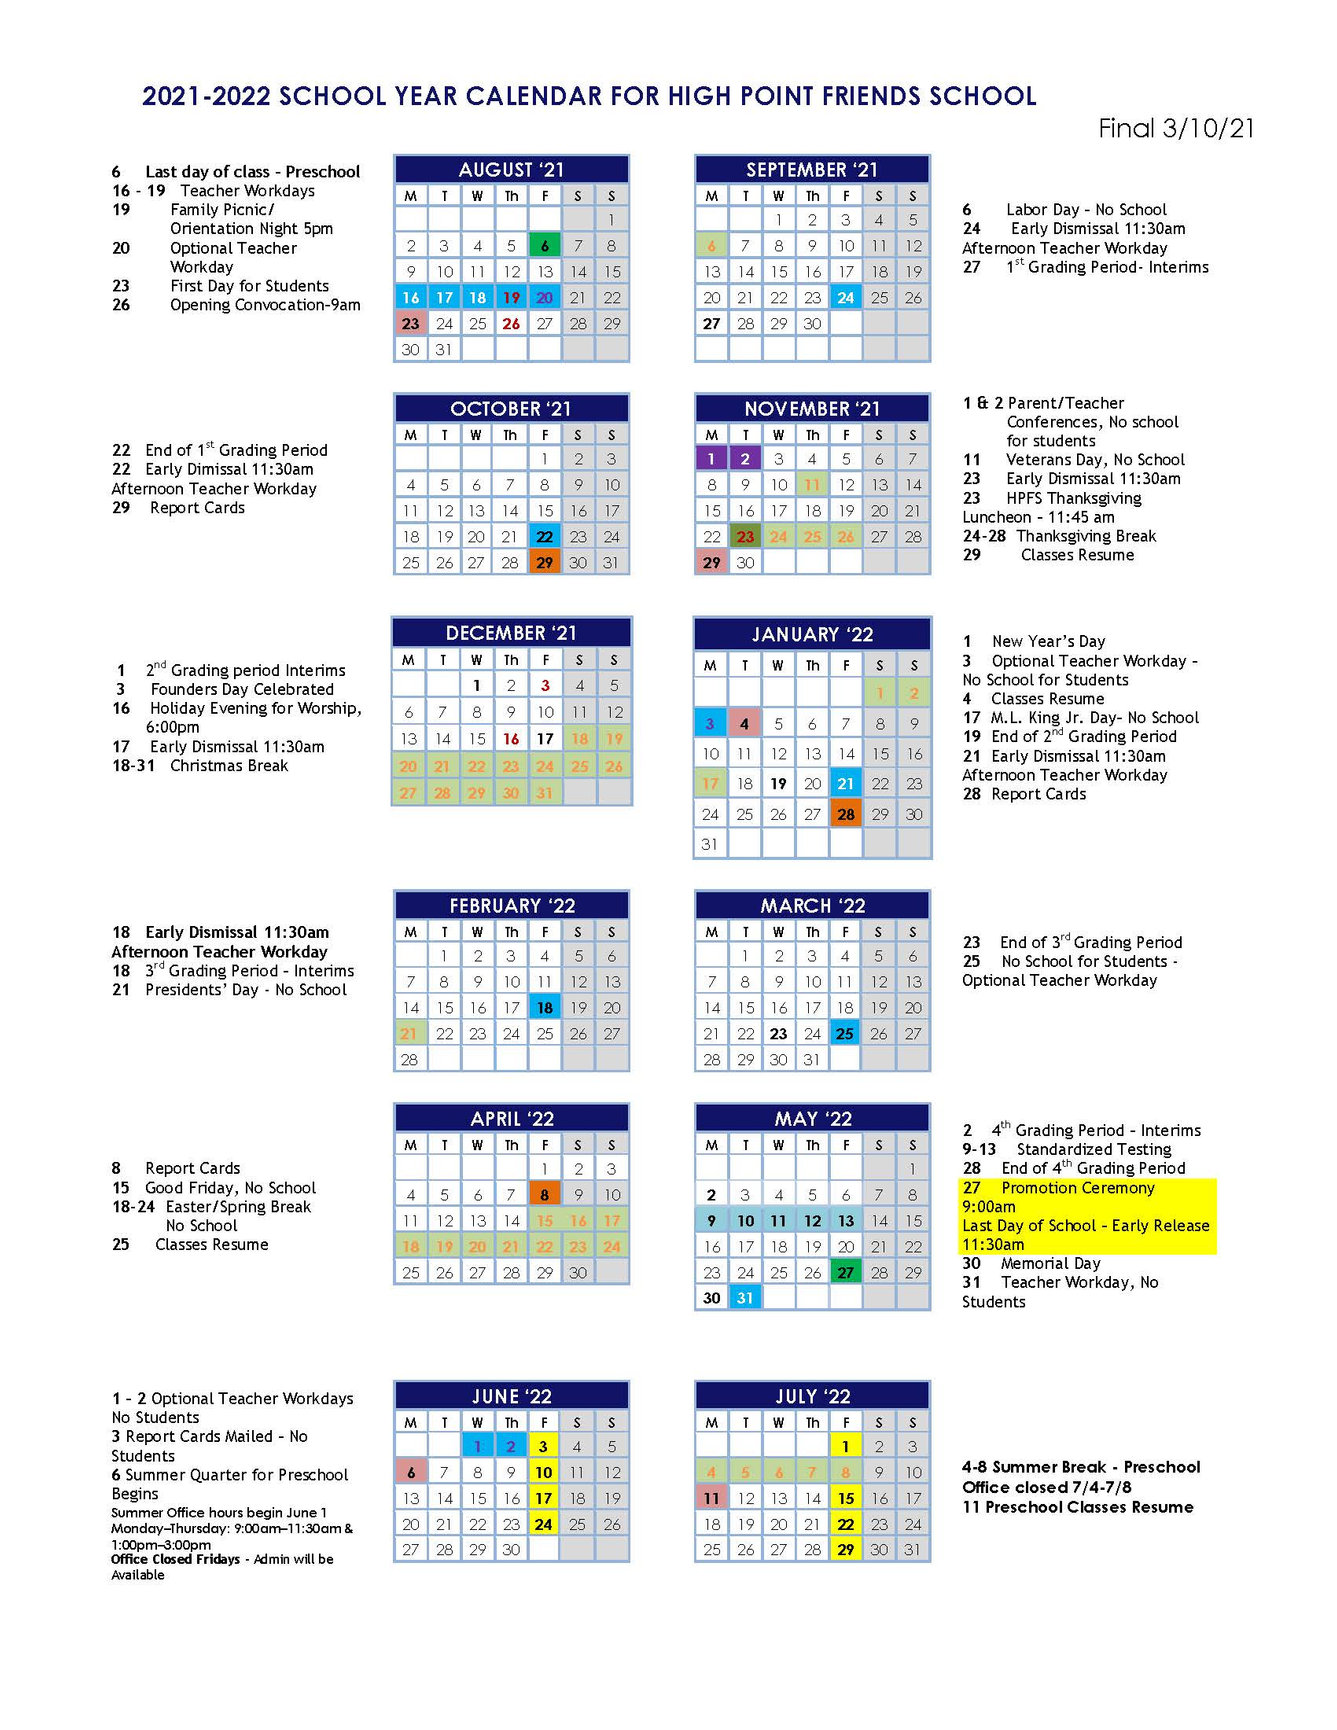 Surry Community College Calendar 2022 2021-2022 Calendar - High Point Friends School